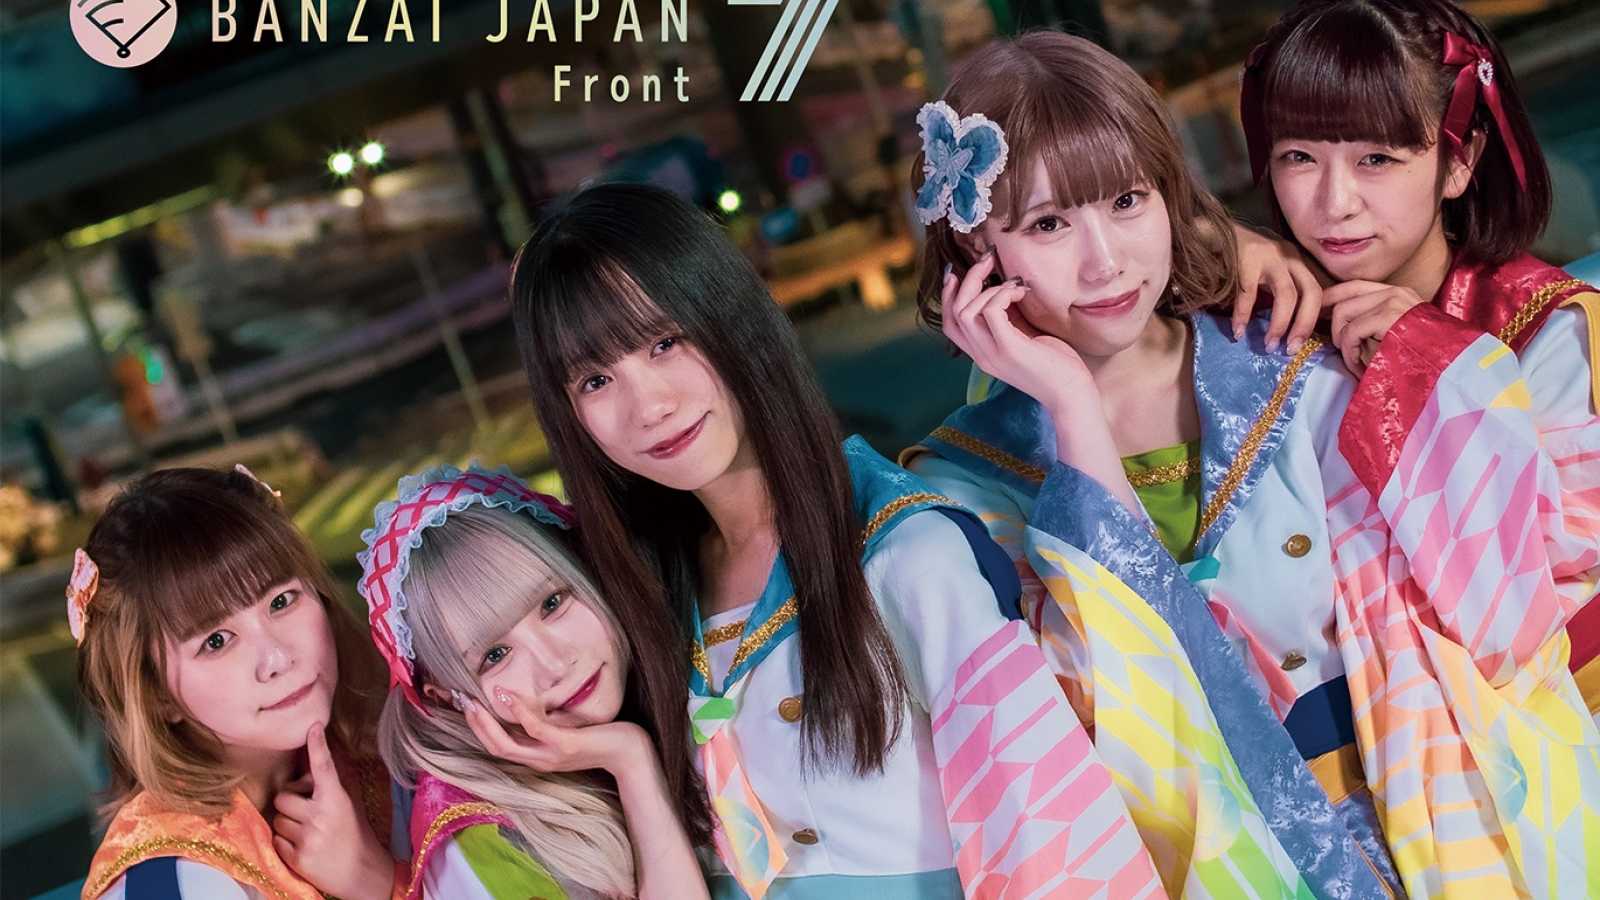 BANZAI JAPAN Front 7 débute en major © BANZAI JAPAN Front 7. All rights reserved.